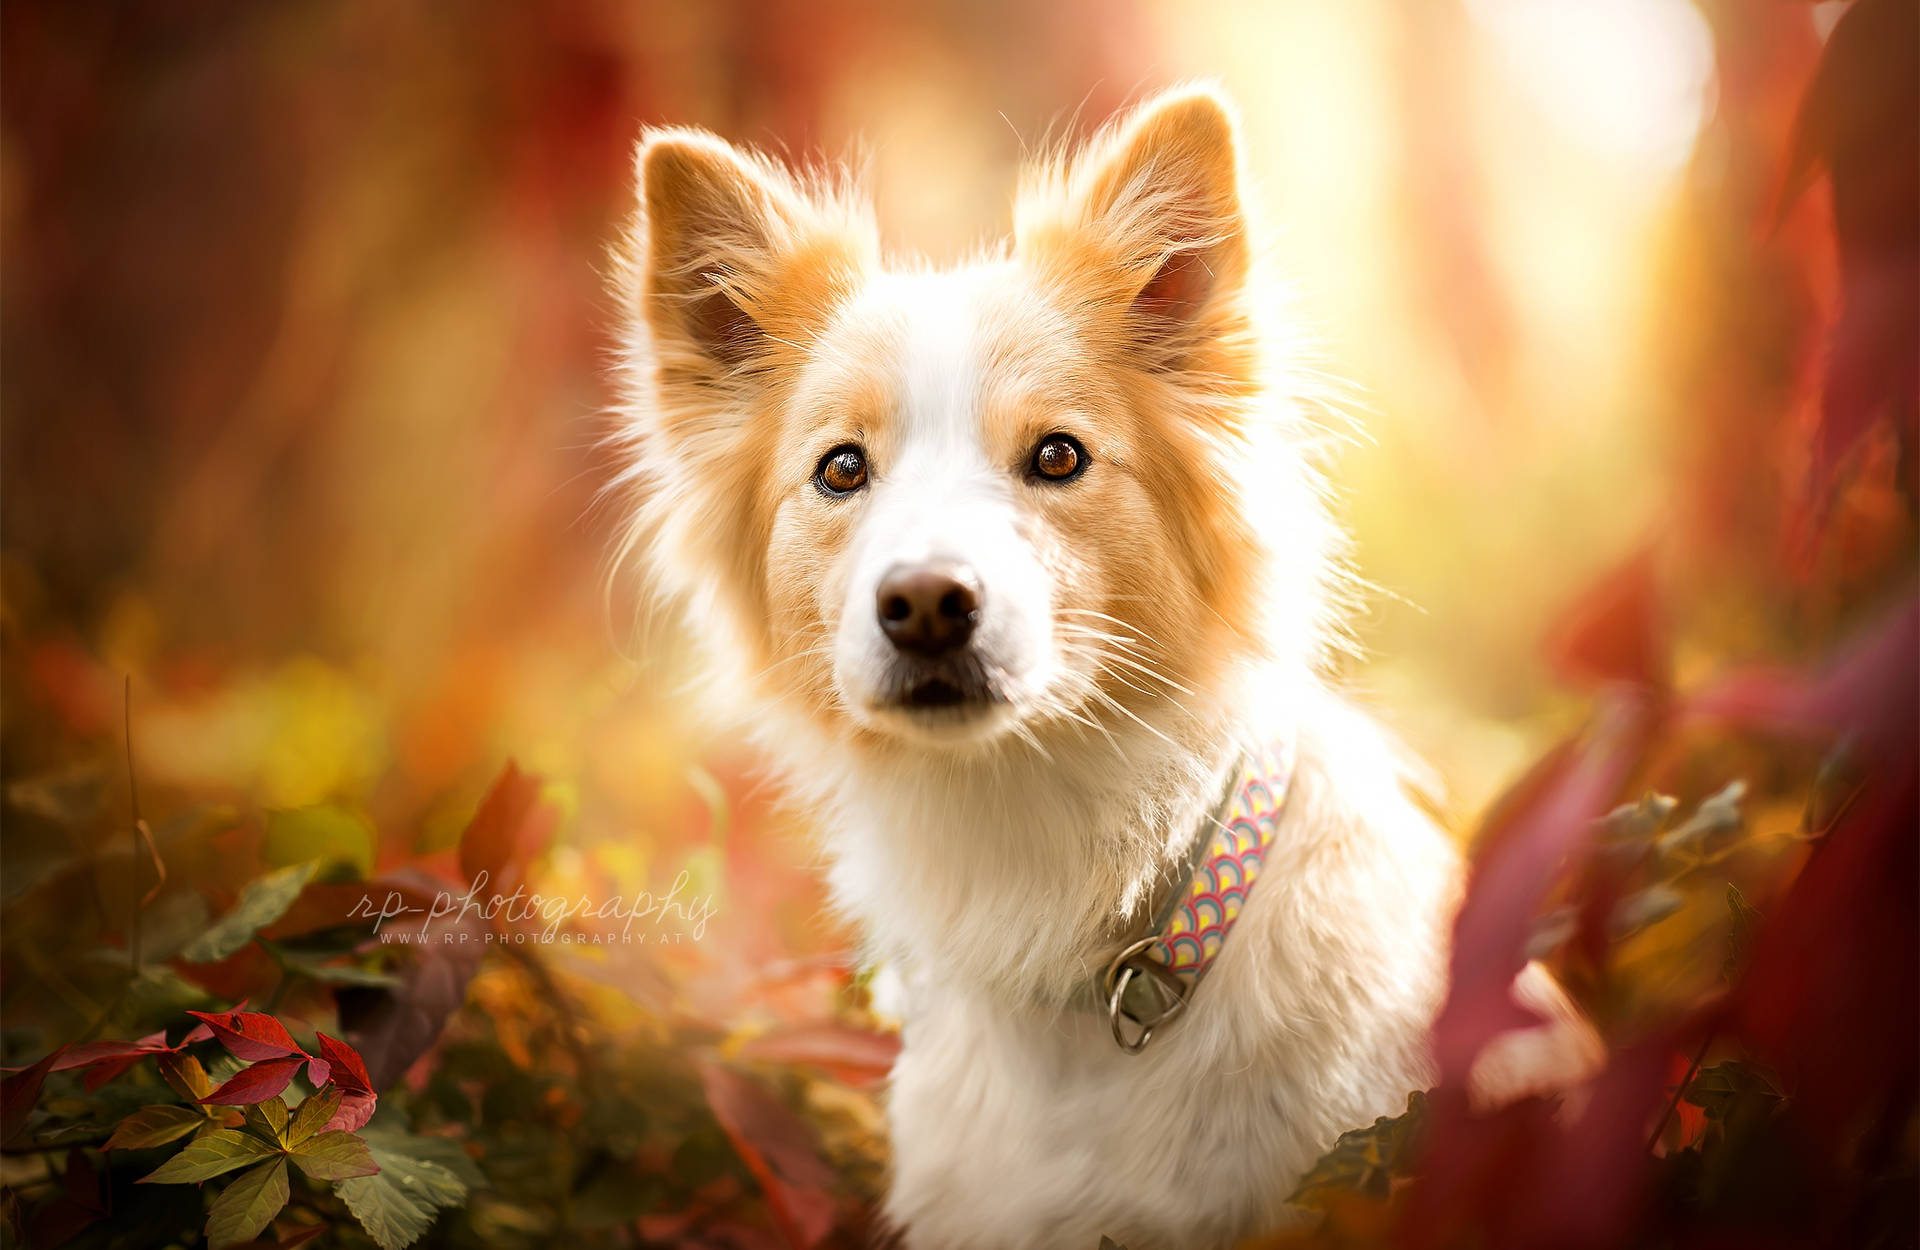 Cute Dog Sitting On Leaves